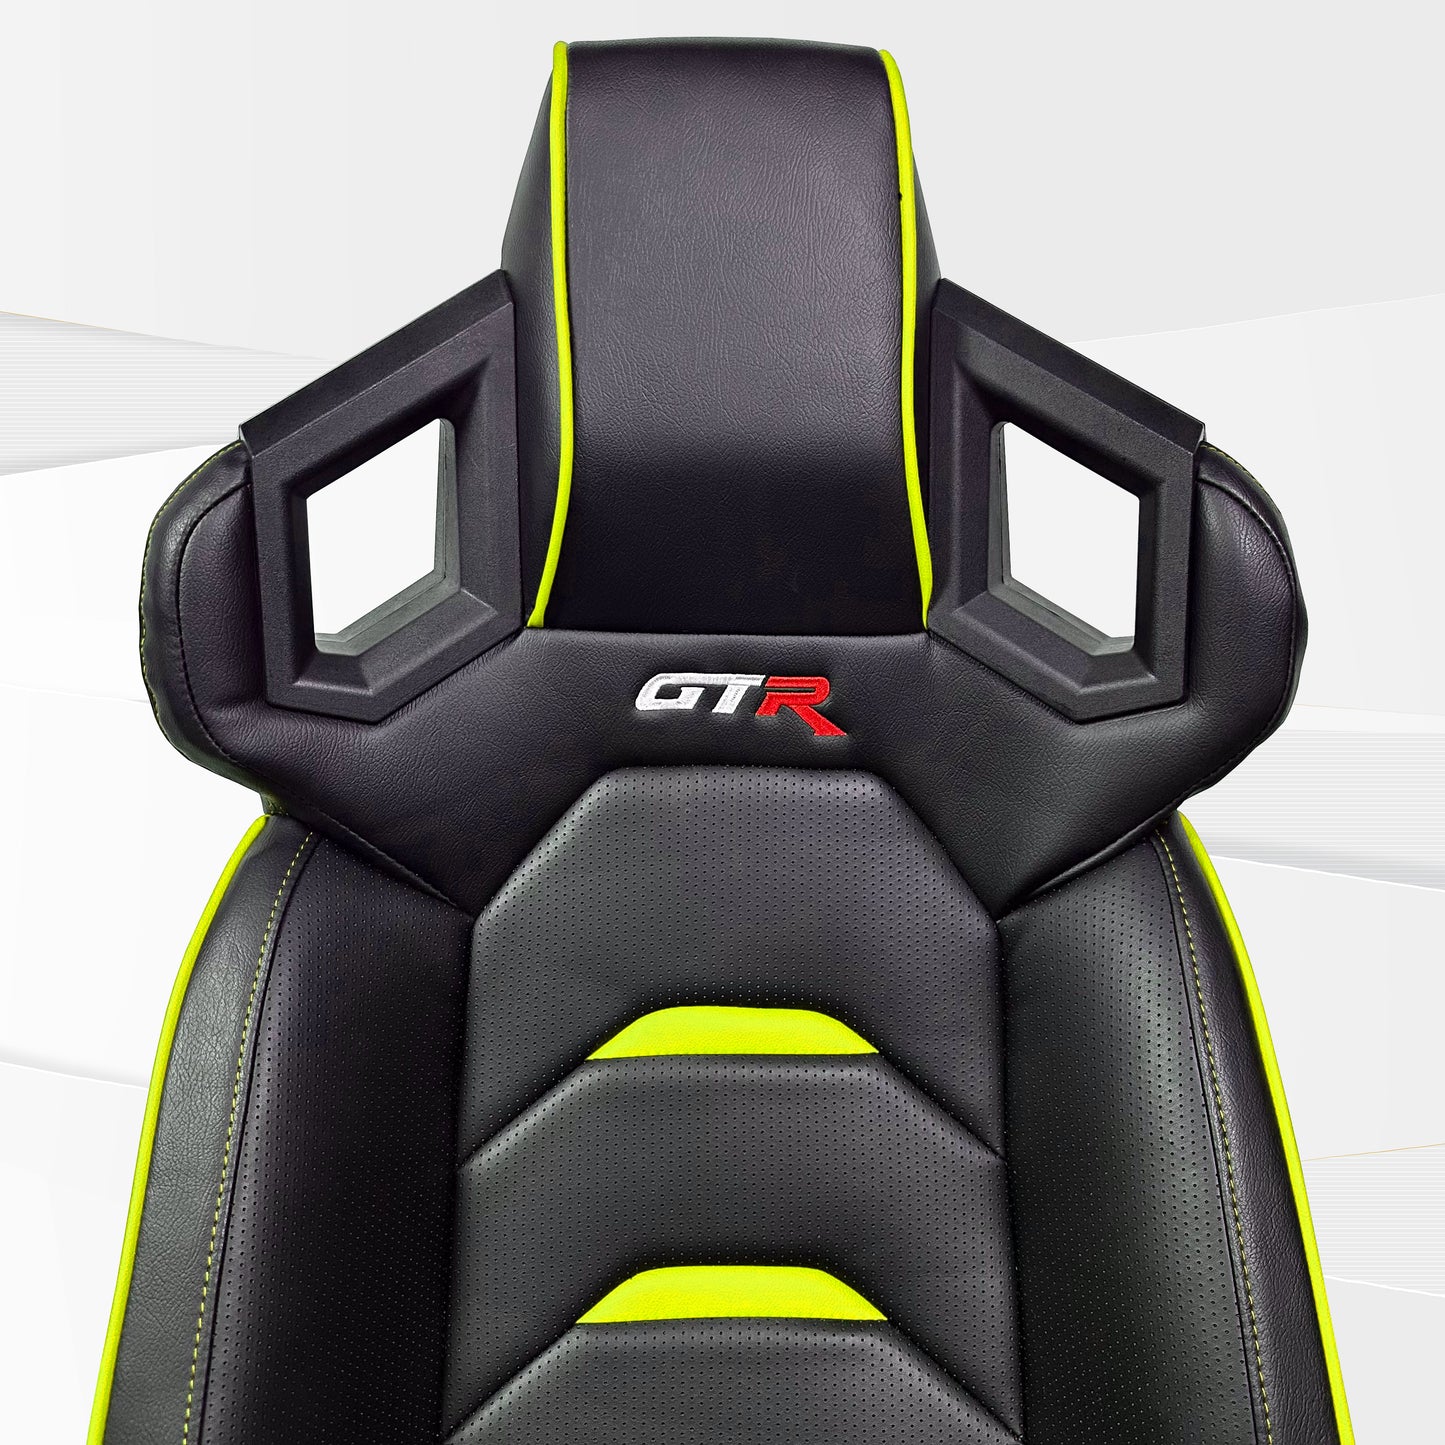 GTR Pista Seat